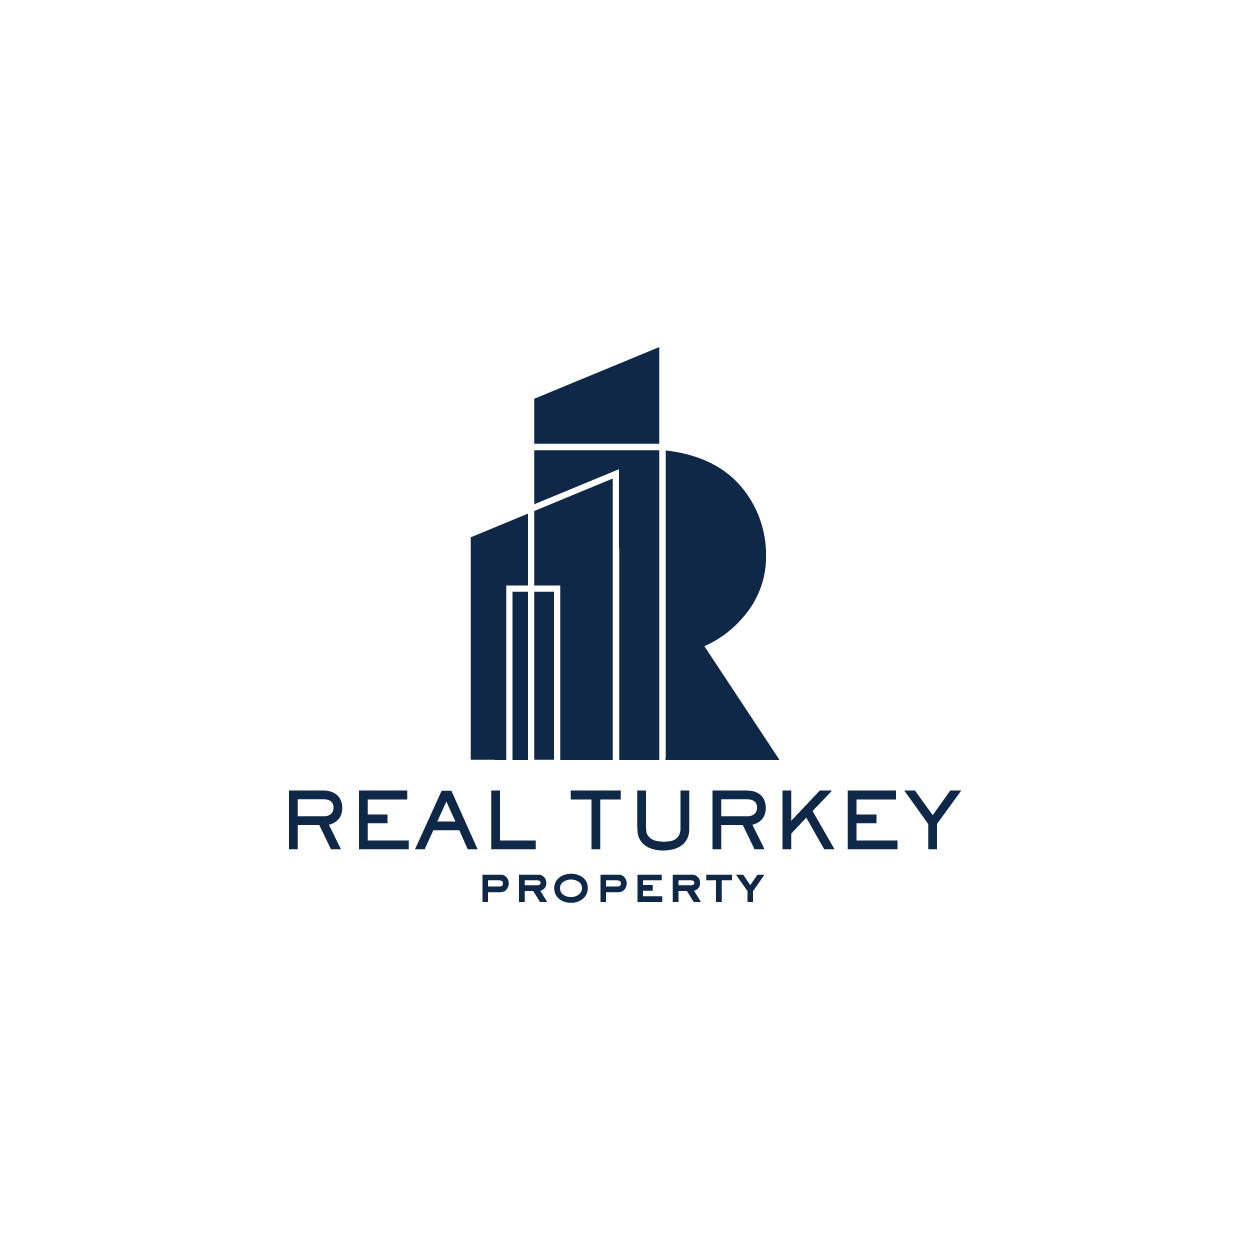 Real Turkey Property